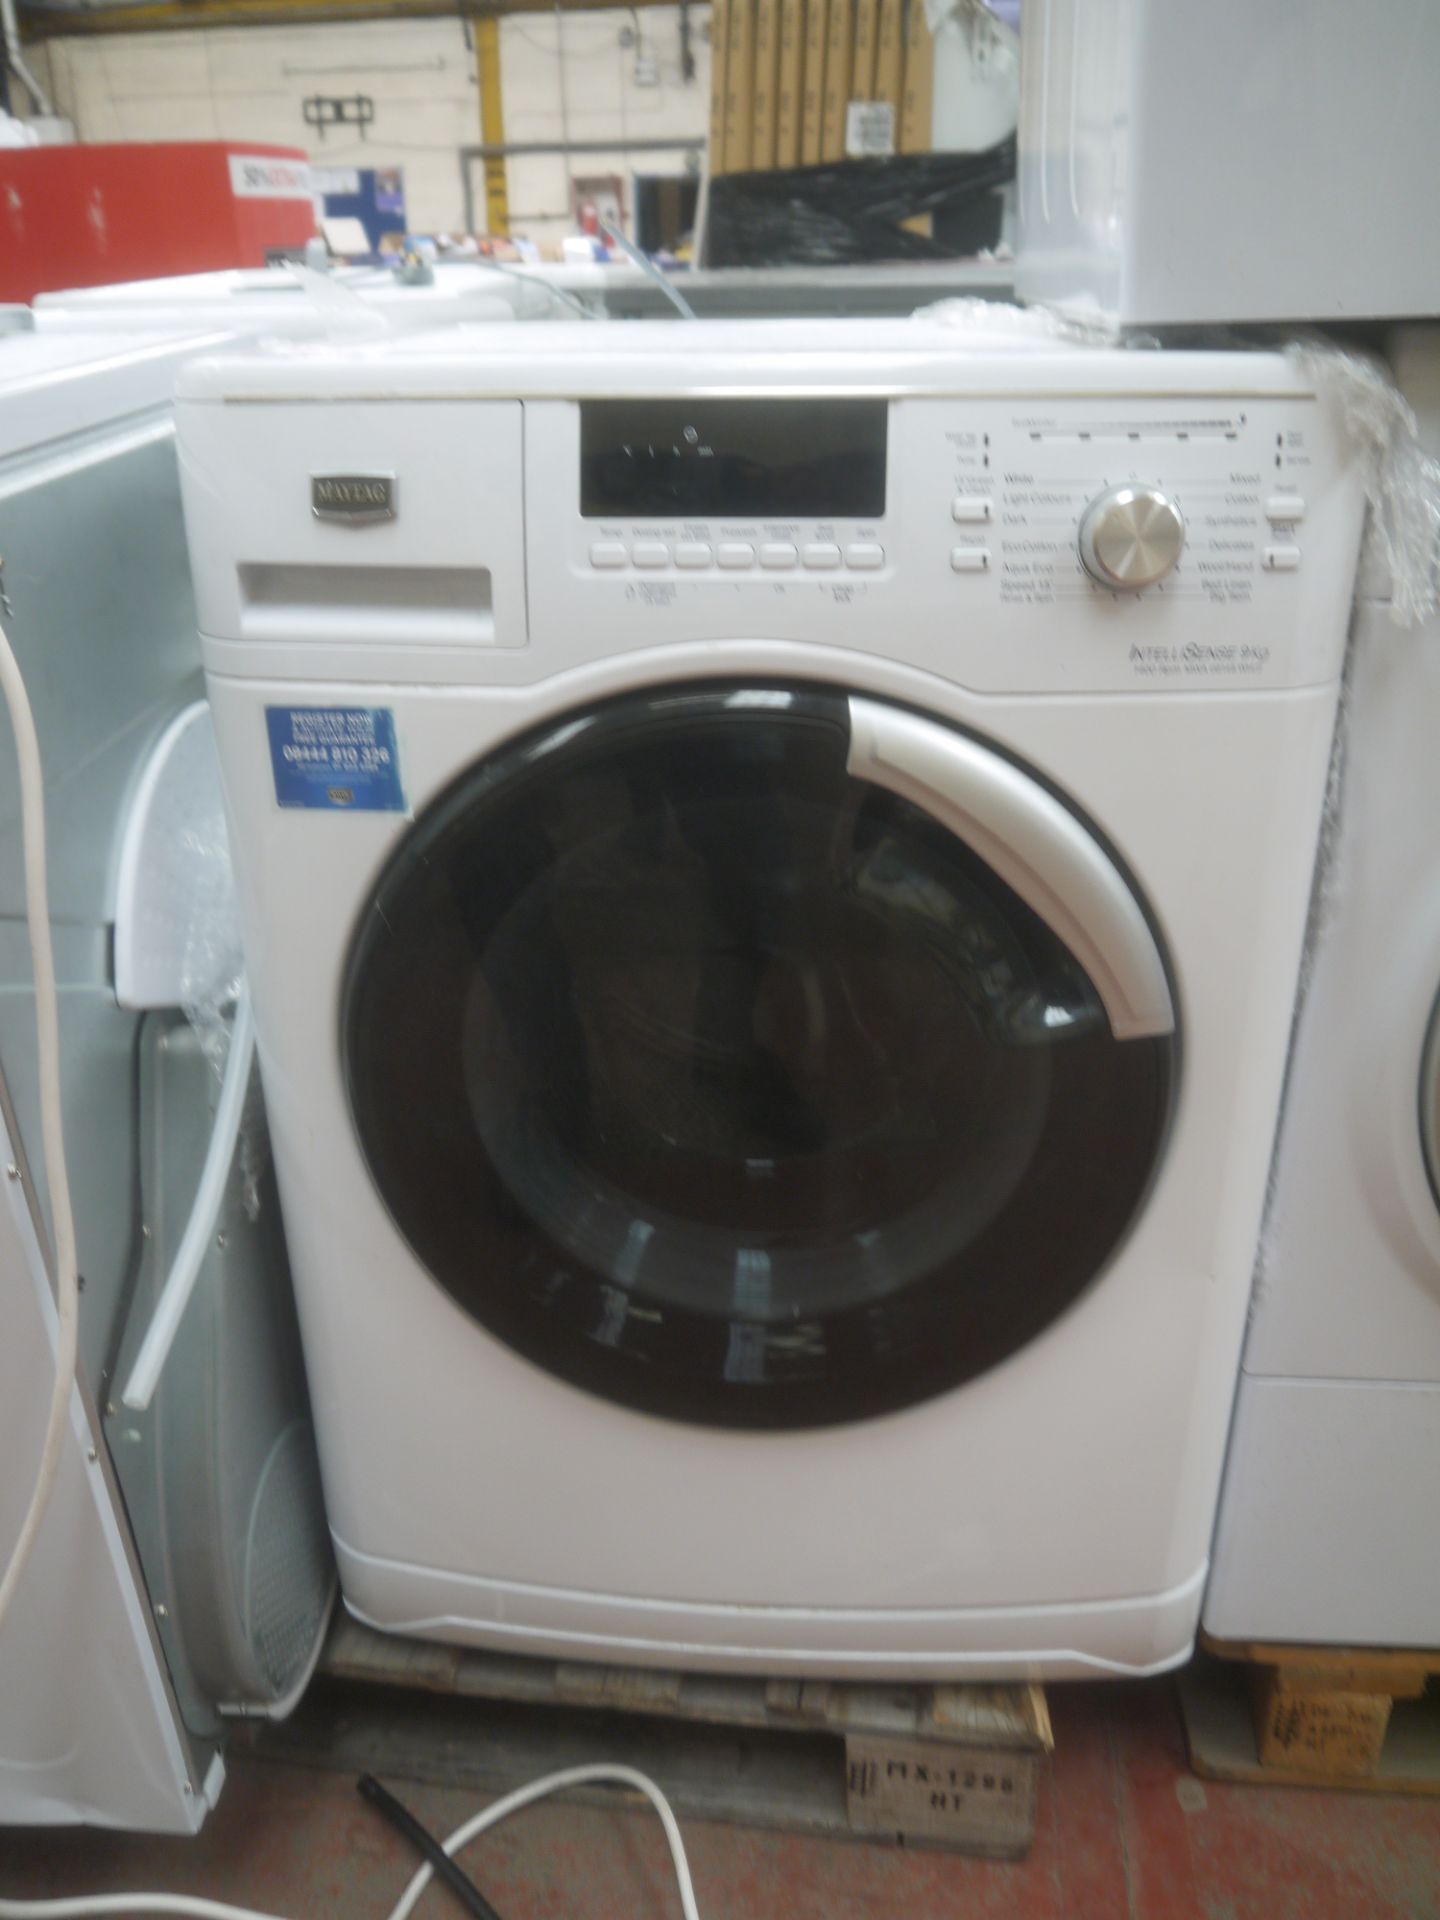 Maytag washing machine, 9kg, no plug, unable to test.